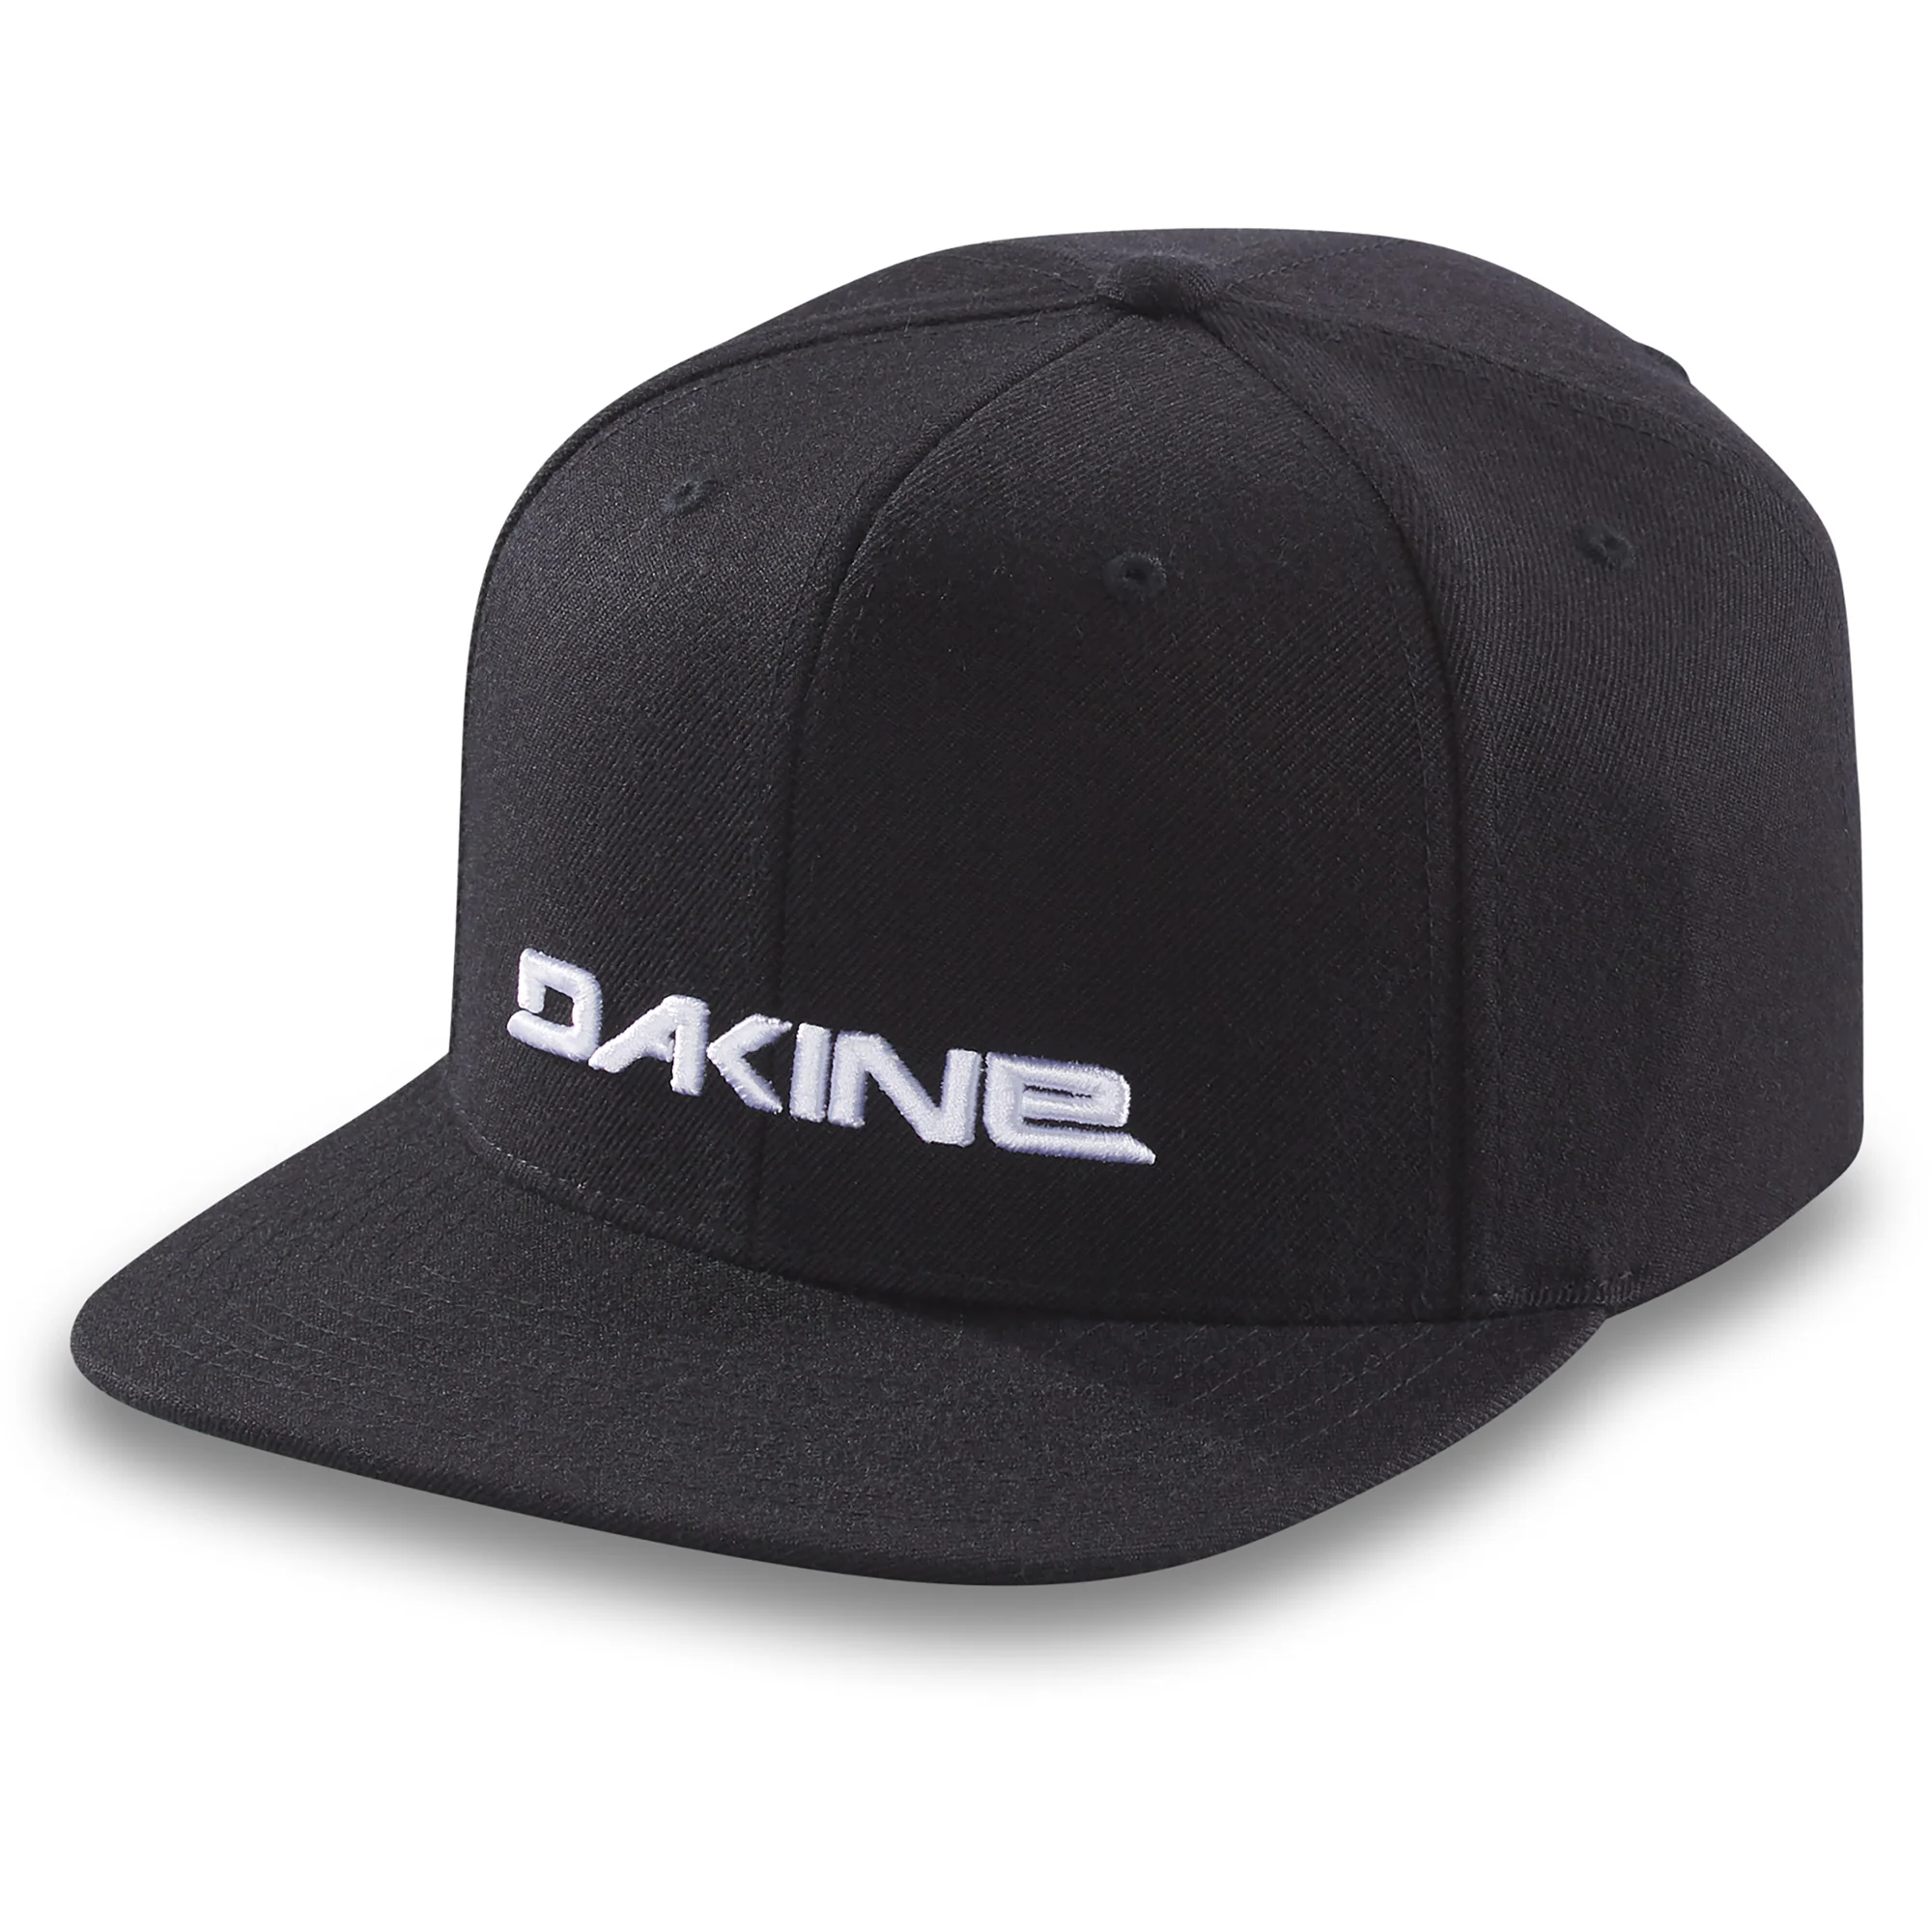 CLASSIC SNAPBACK HAT (black) - DAKINE